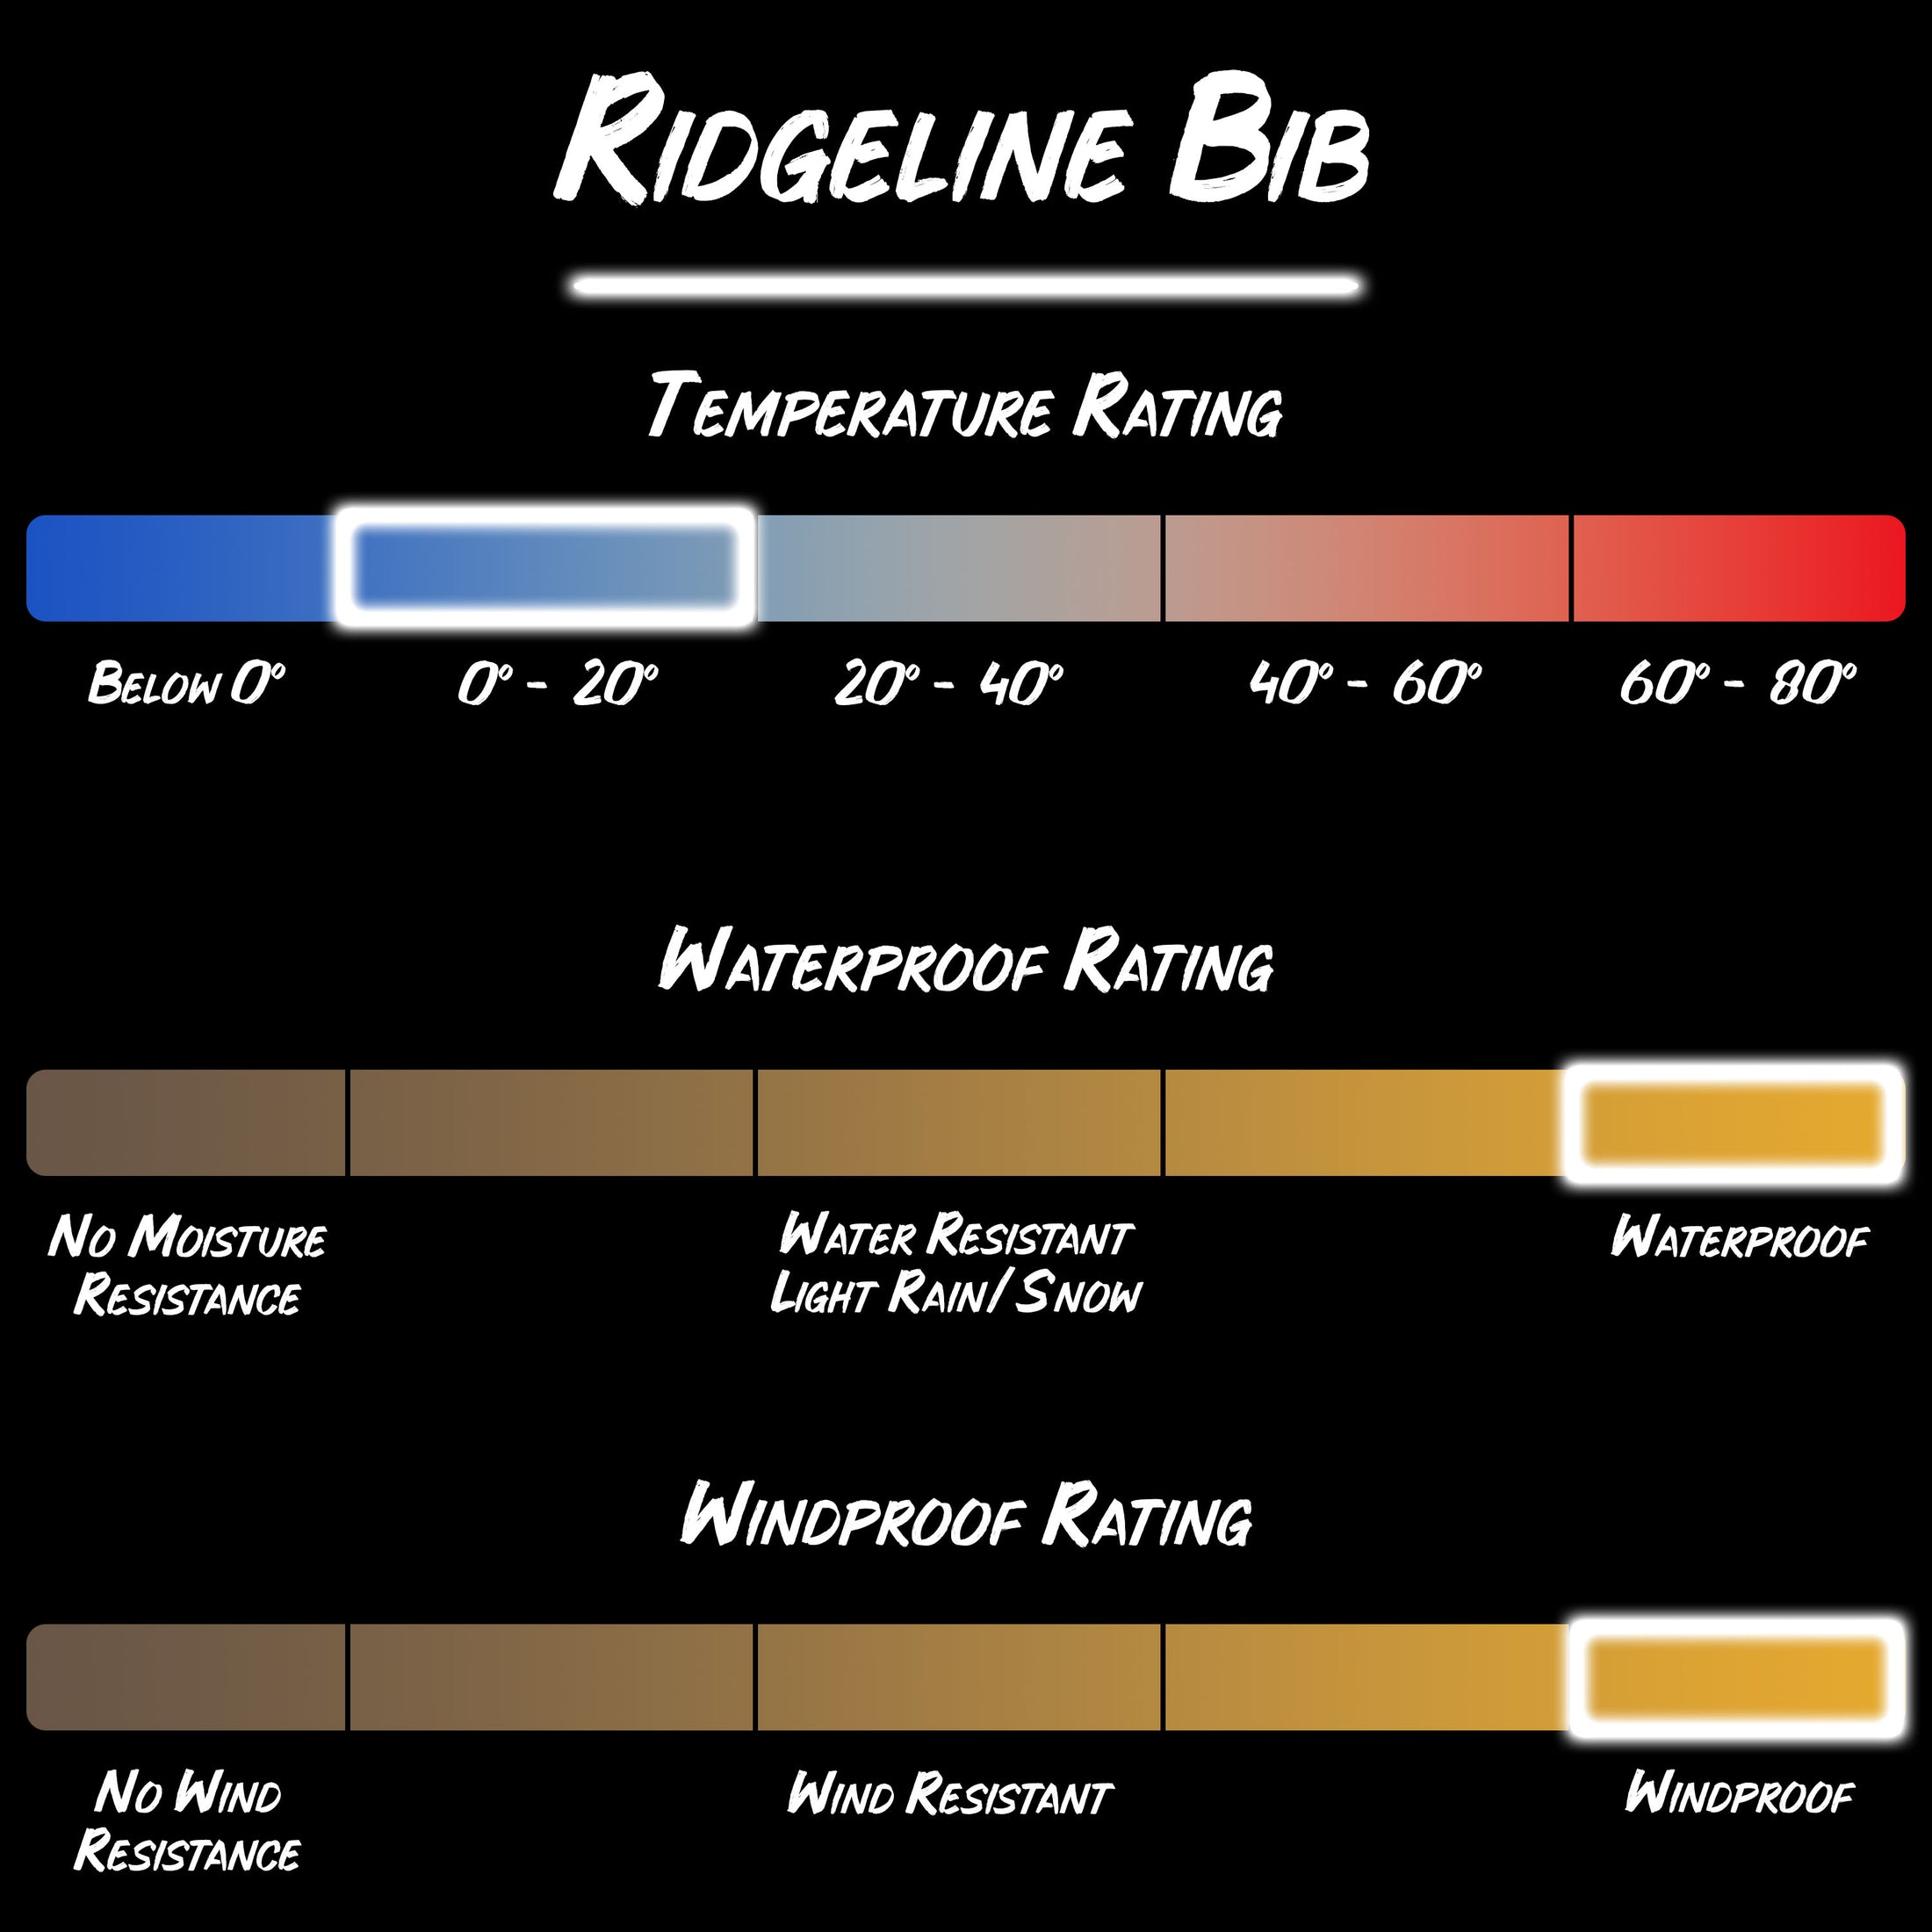 Gamehide ridgeline bib product specifications